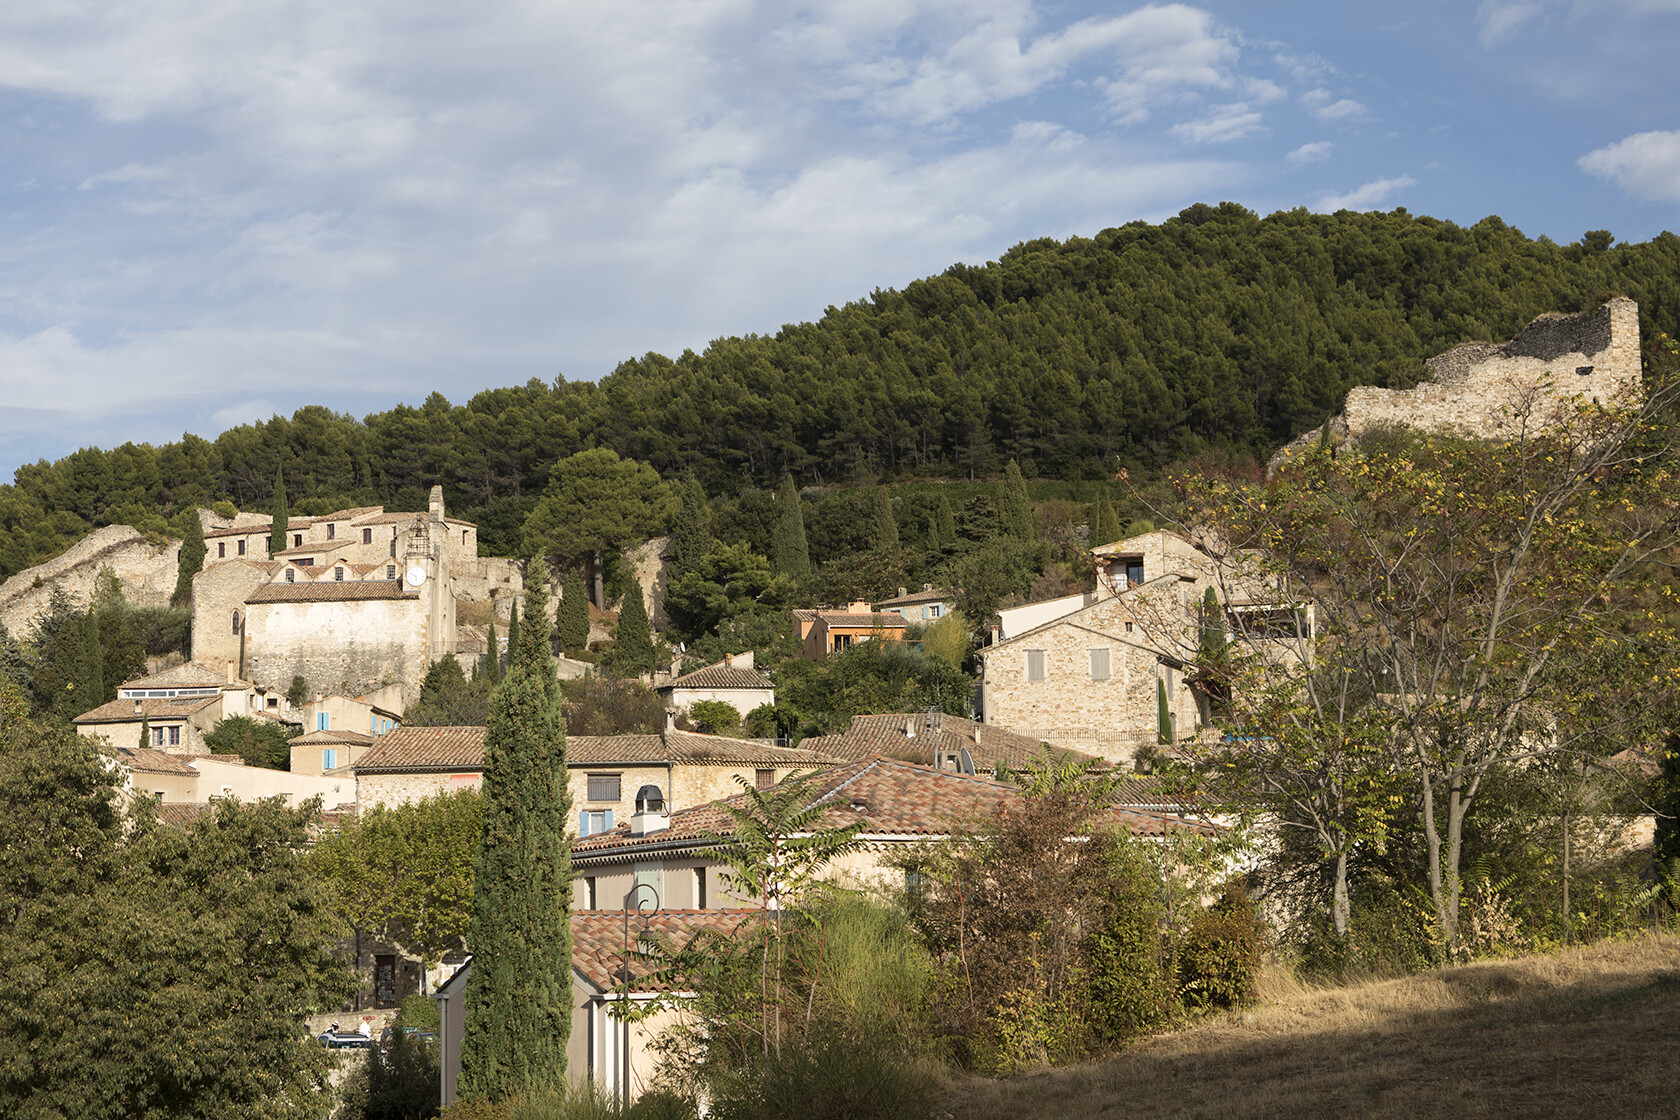 Côtes-du-Rhône Wine Village of Gigondas in the Vaucluse